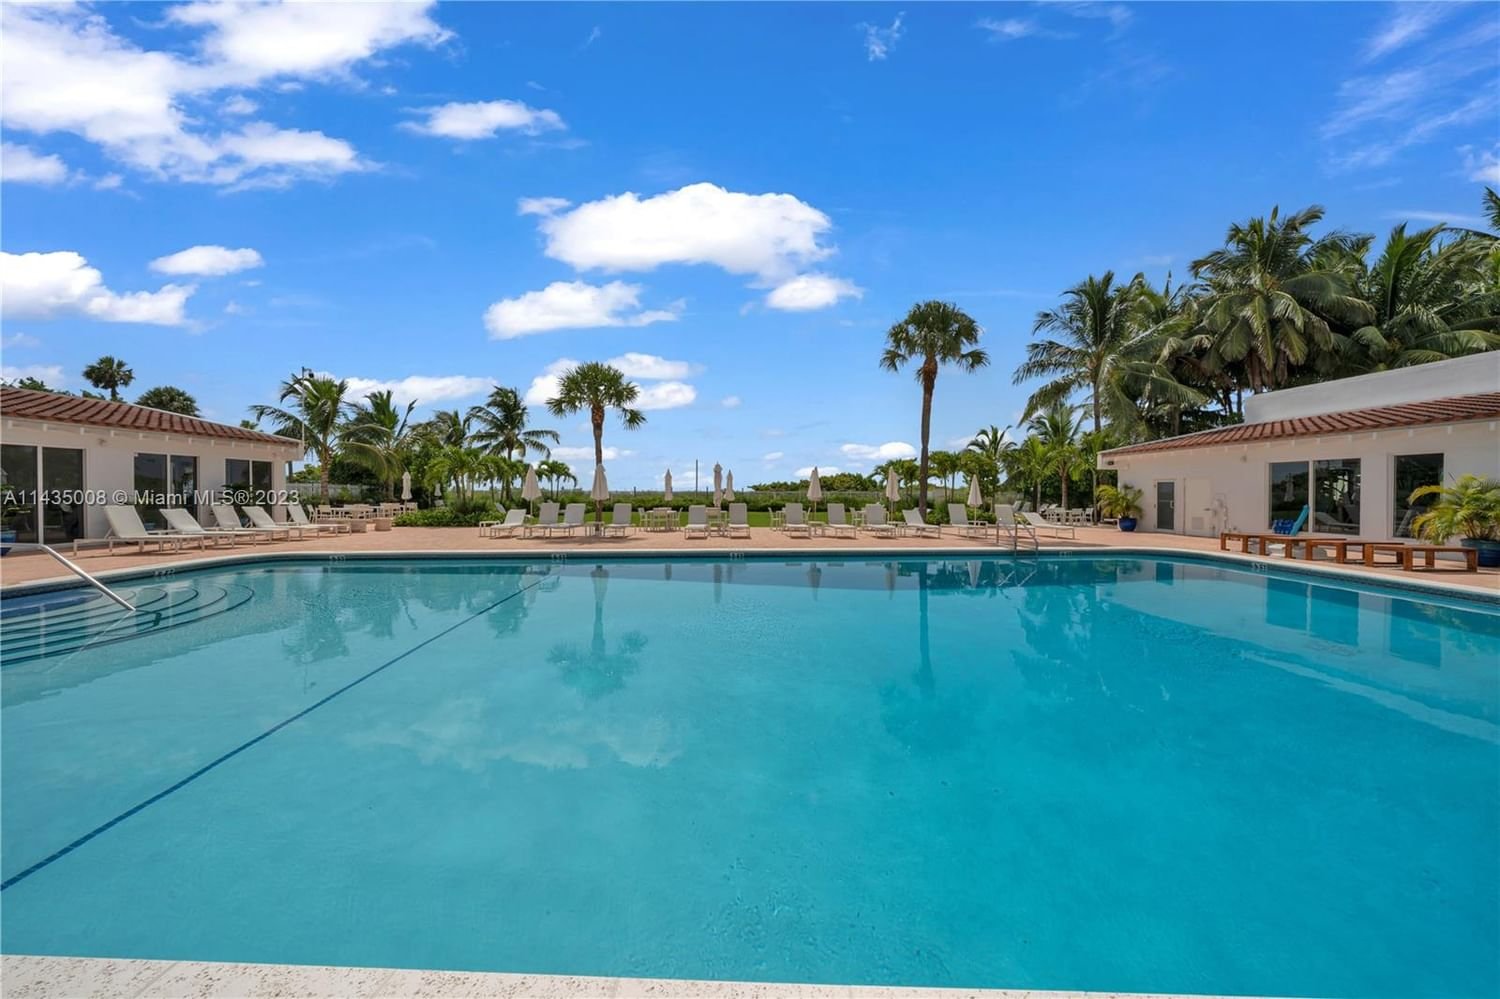 Real estate property located at 2457 Collins Ave #306, Miami-Dade County, Miami Beach, FL